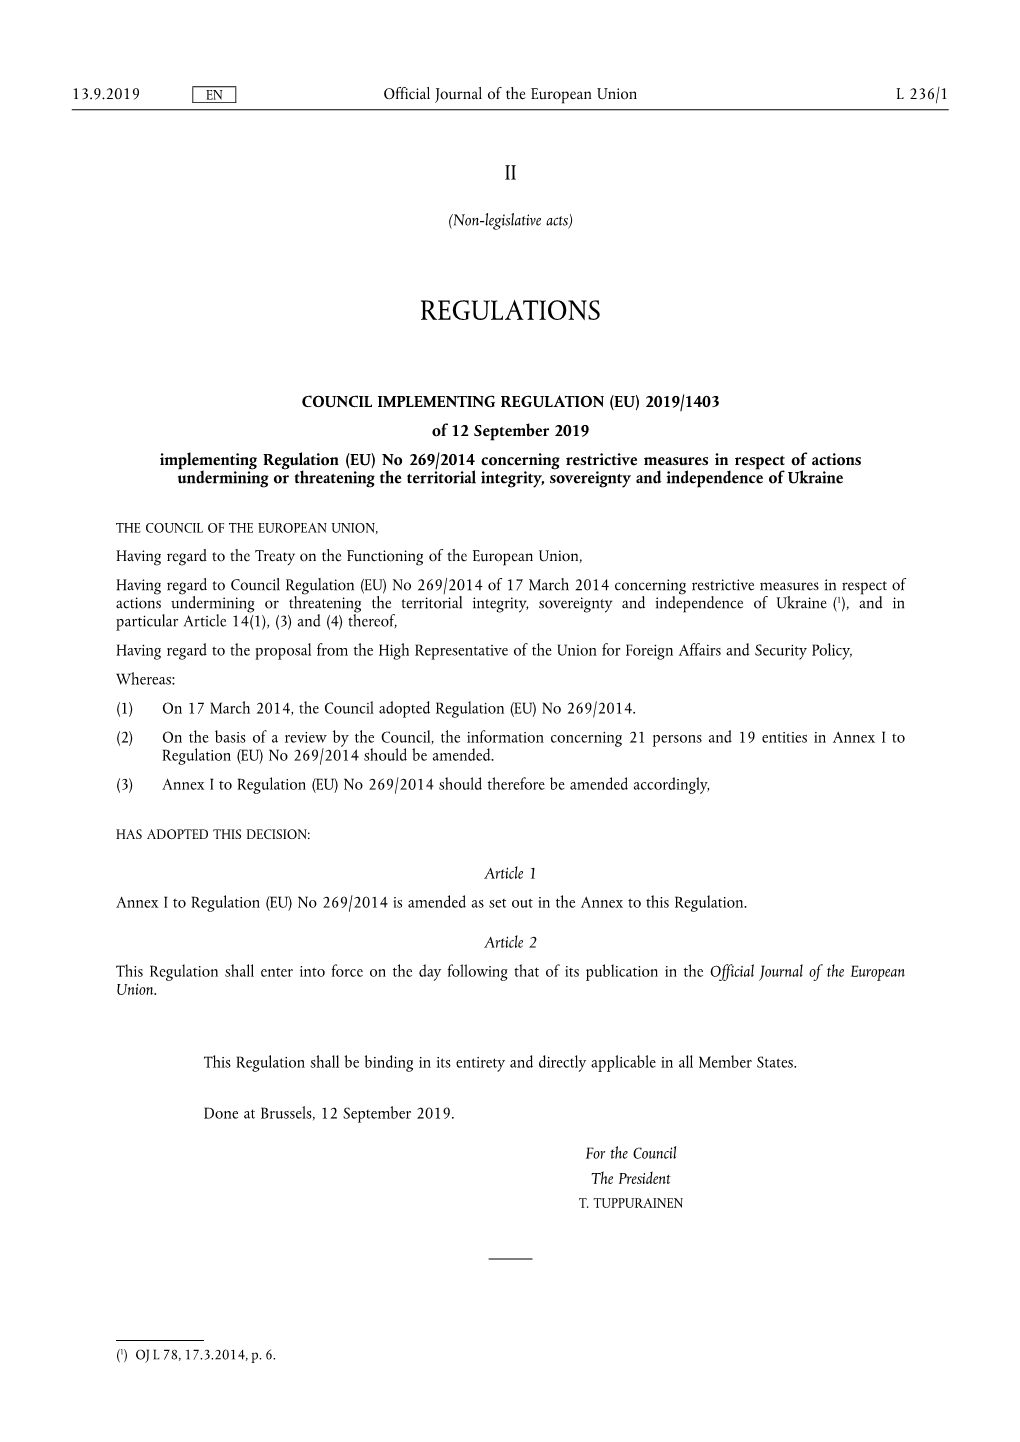 Council Implementing Regulation (Eu) 2019/ 1403